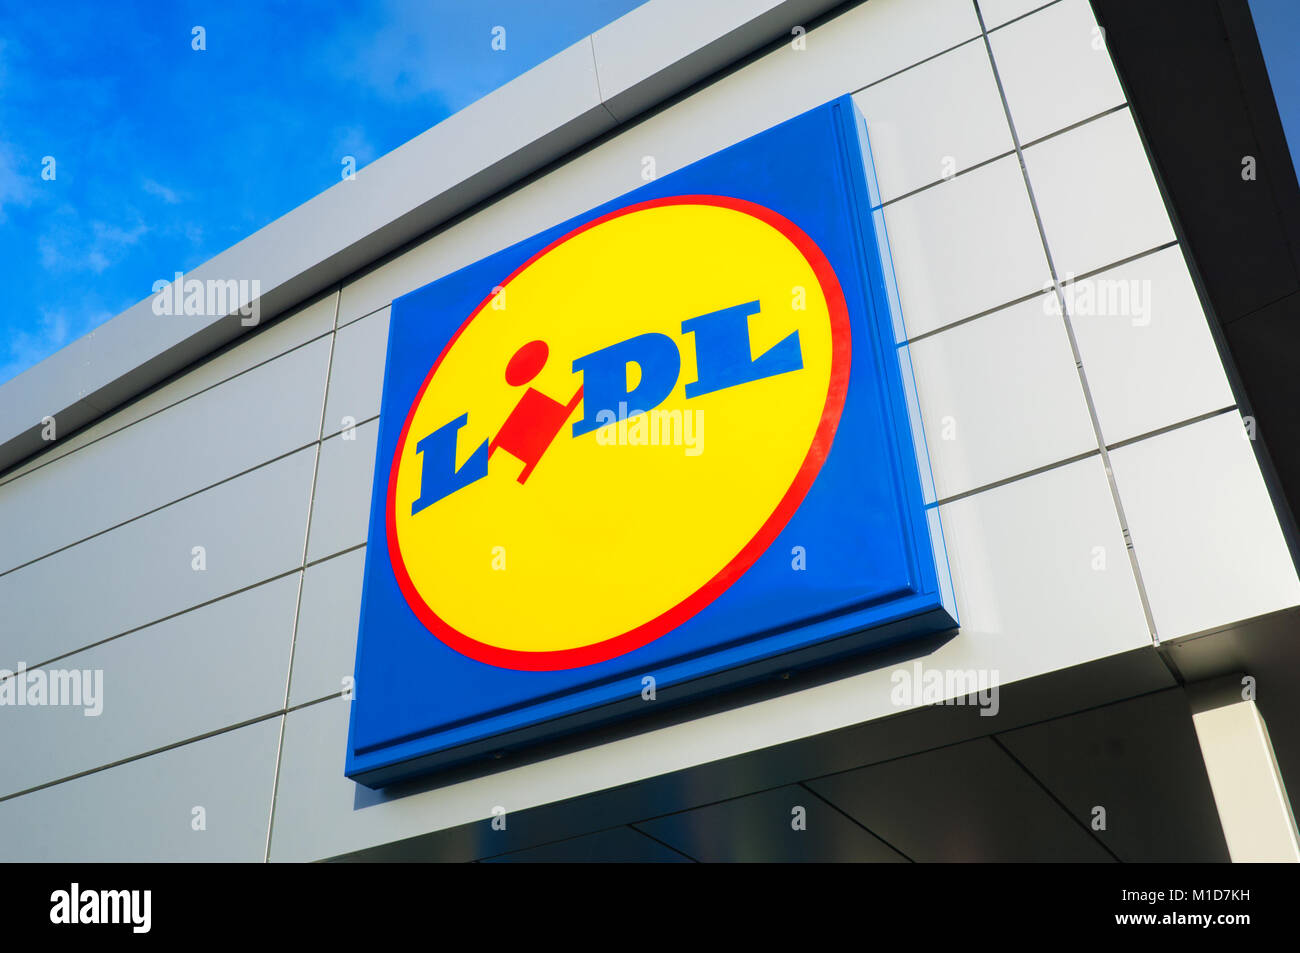 Lidl supermarkets sign - John Gollop Stock Photo